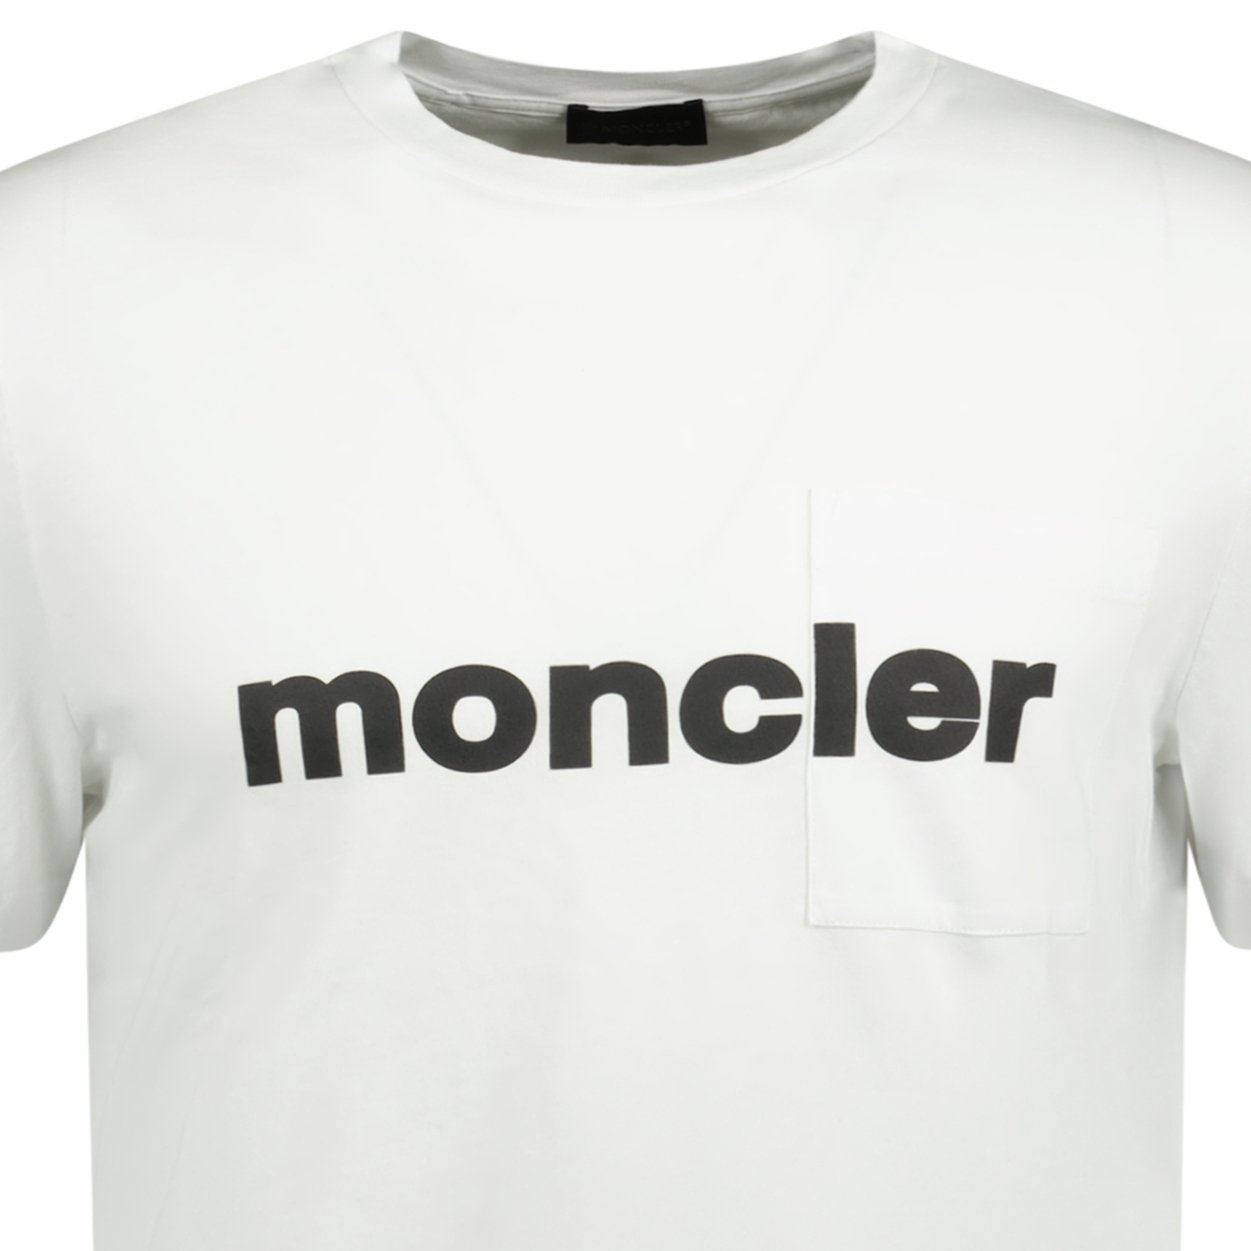 Moncler 'Maglia' Front Pocket Logo Writing T-Shirt White